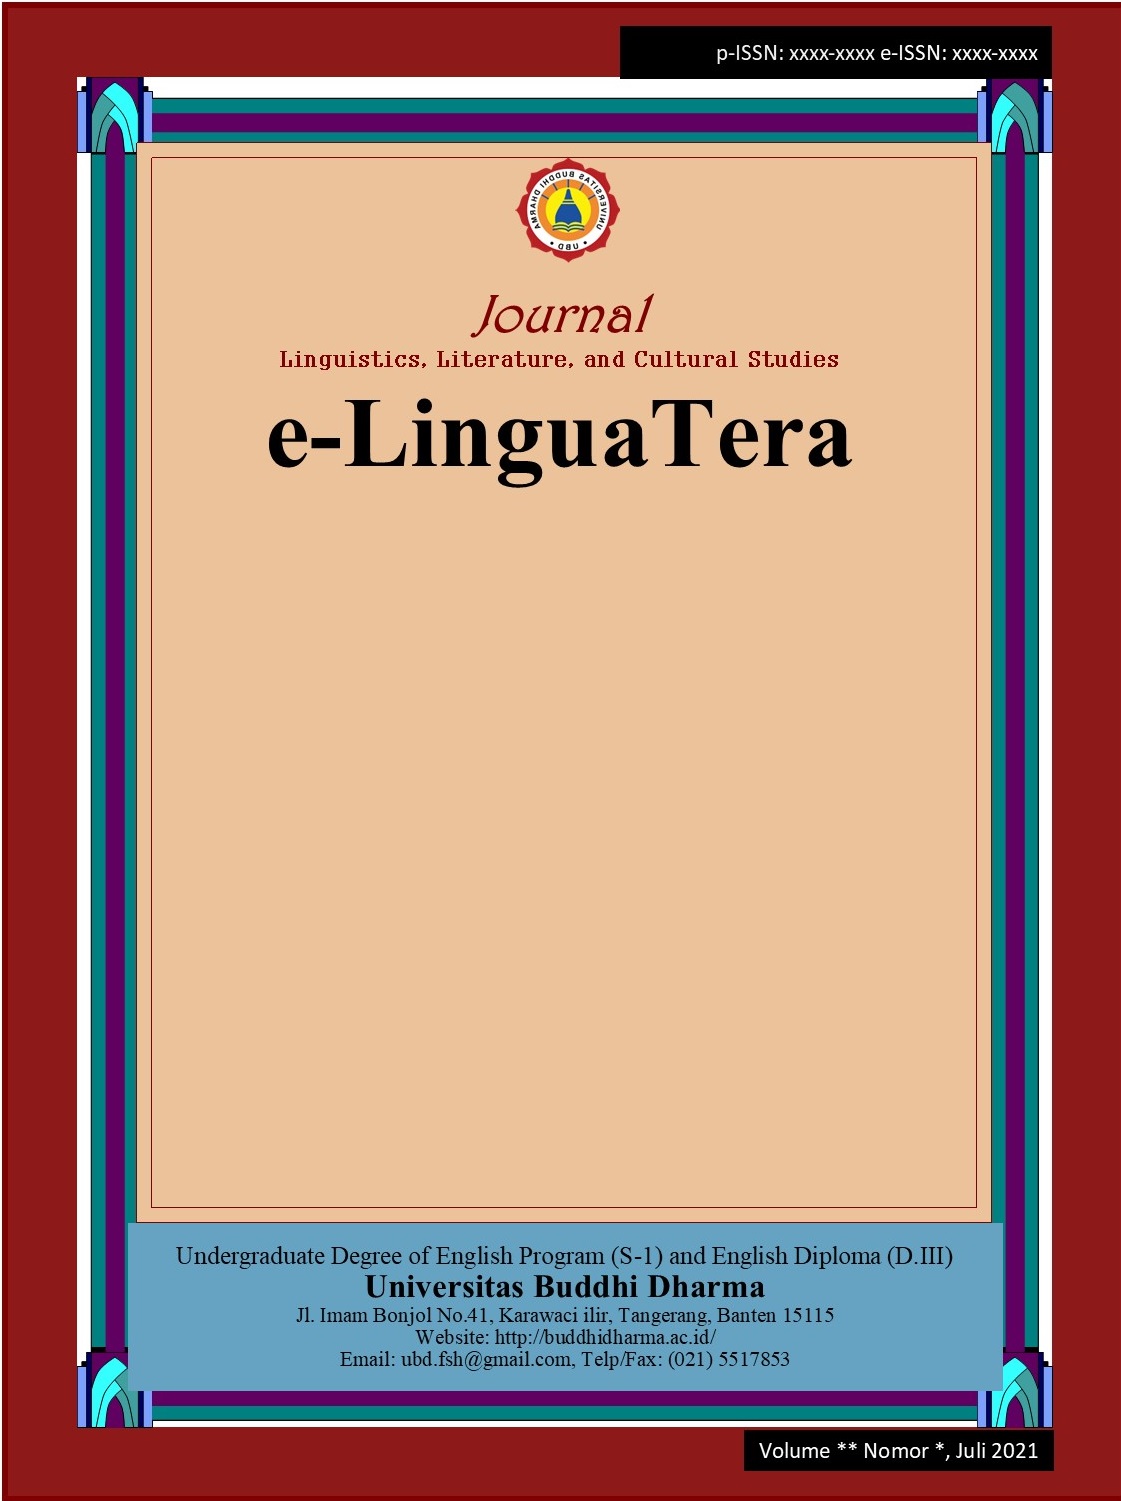 e-LinguaTera: Journal of Linguistics, Literature, and Cultural Studies